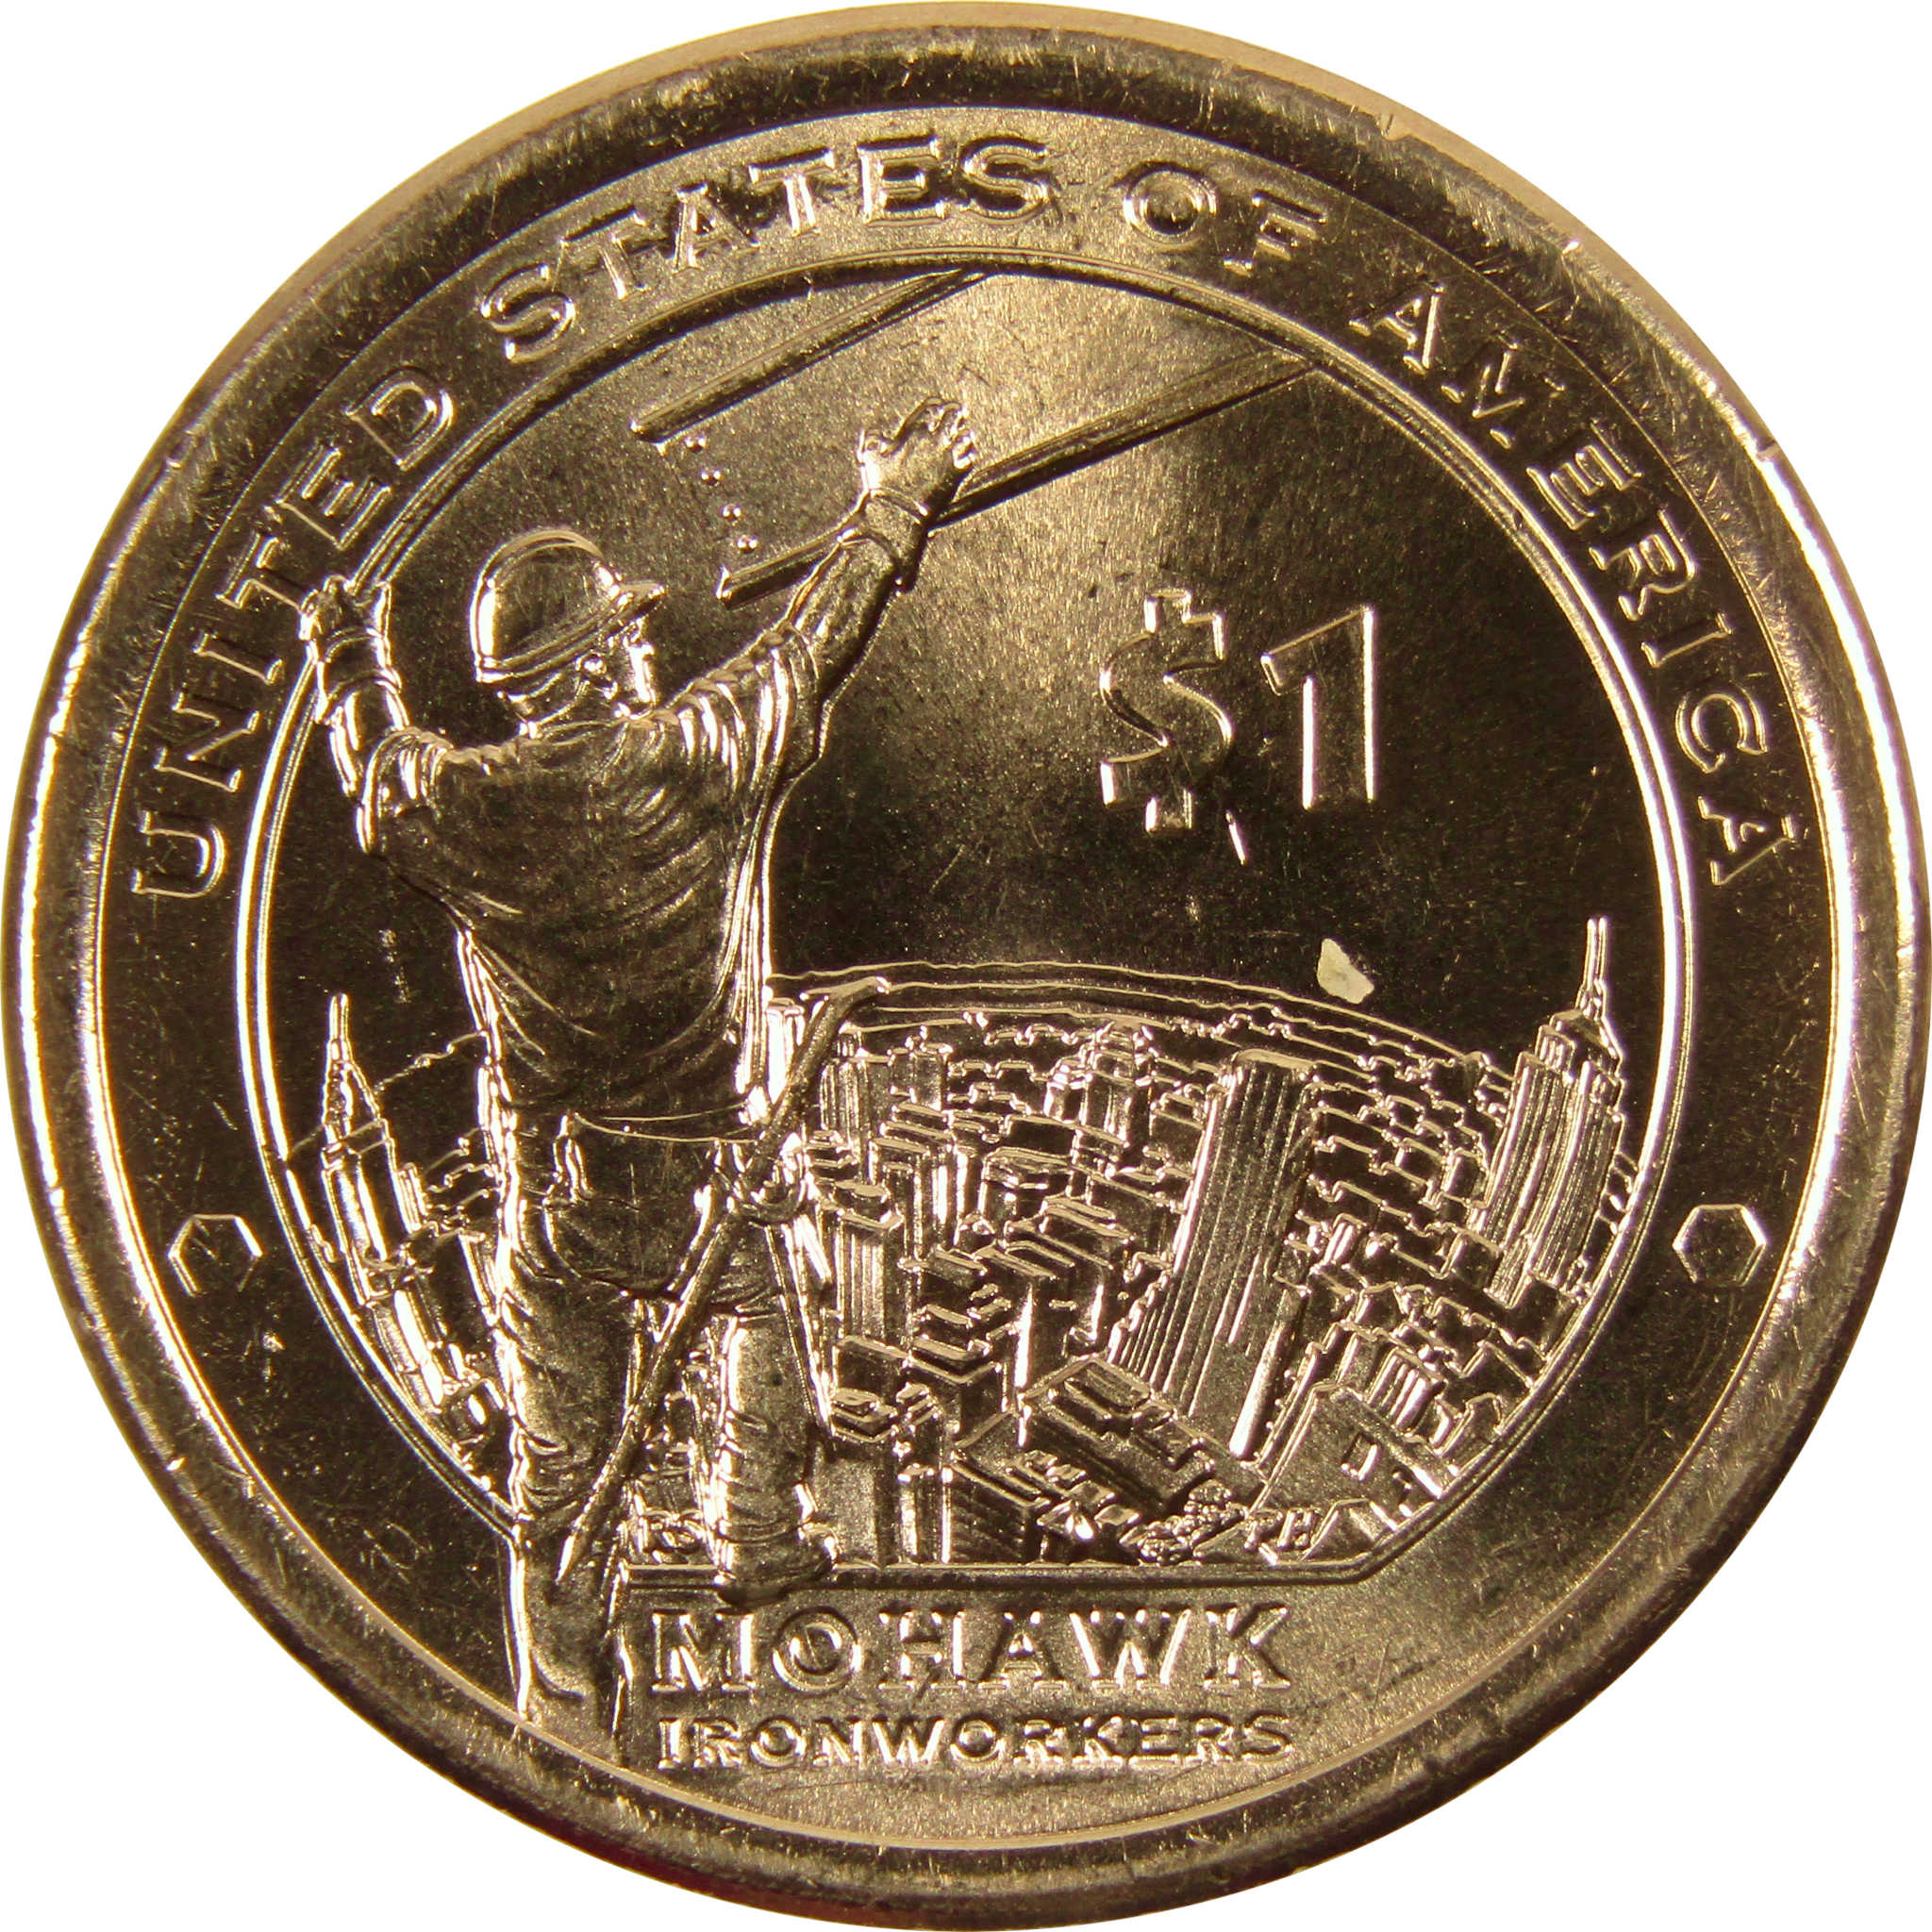 2015 D Mohawk Ironworkers Native American Dollar BU Uncirculated $1